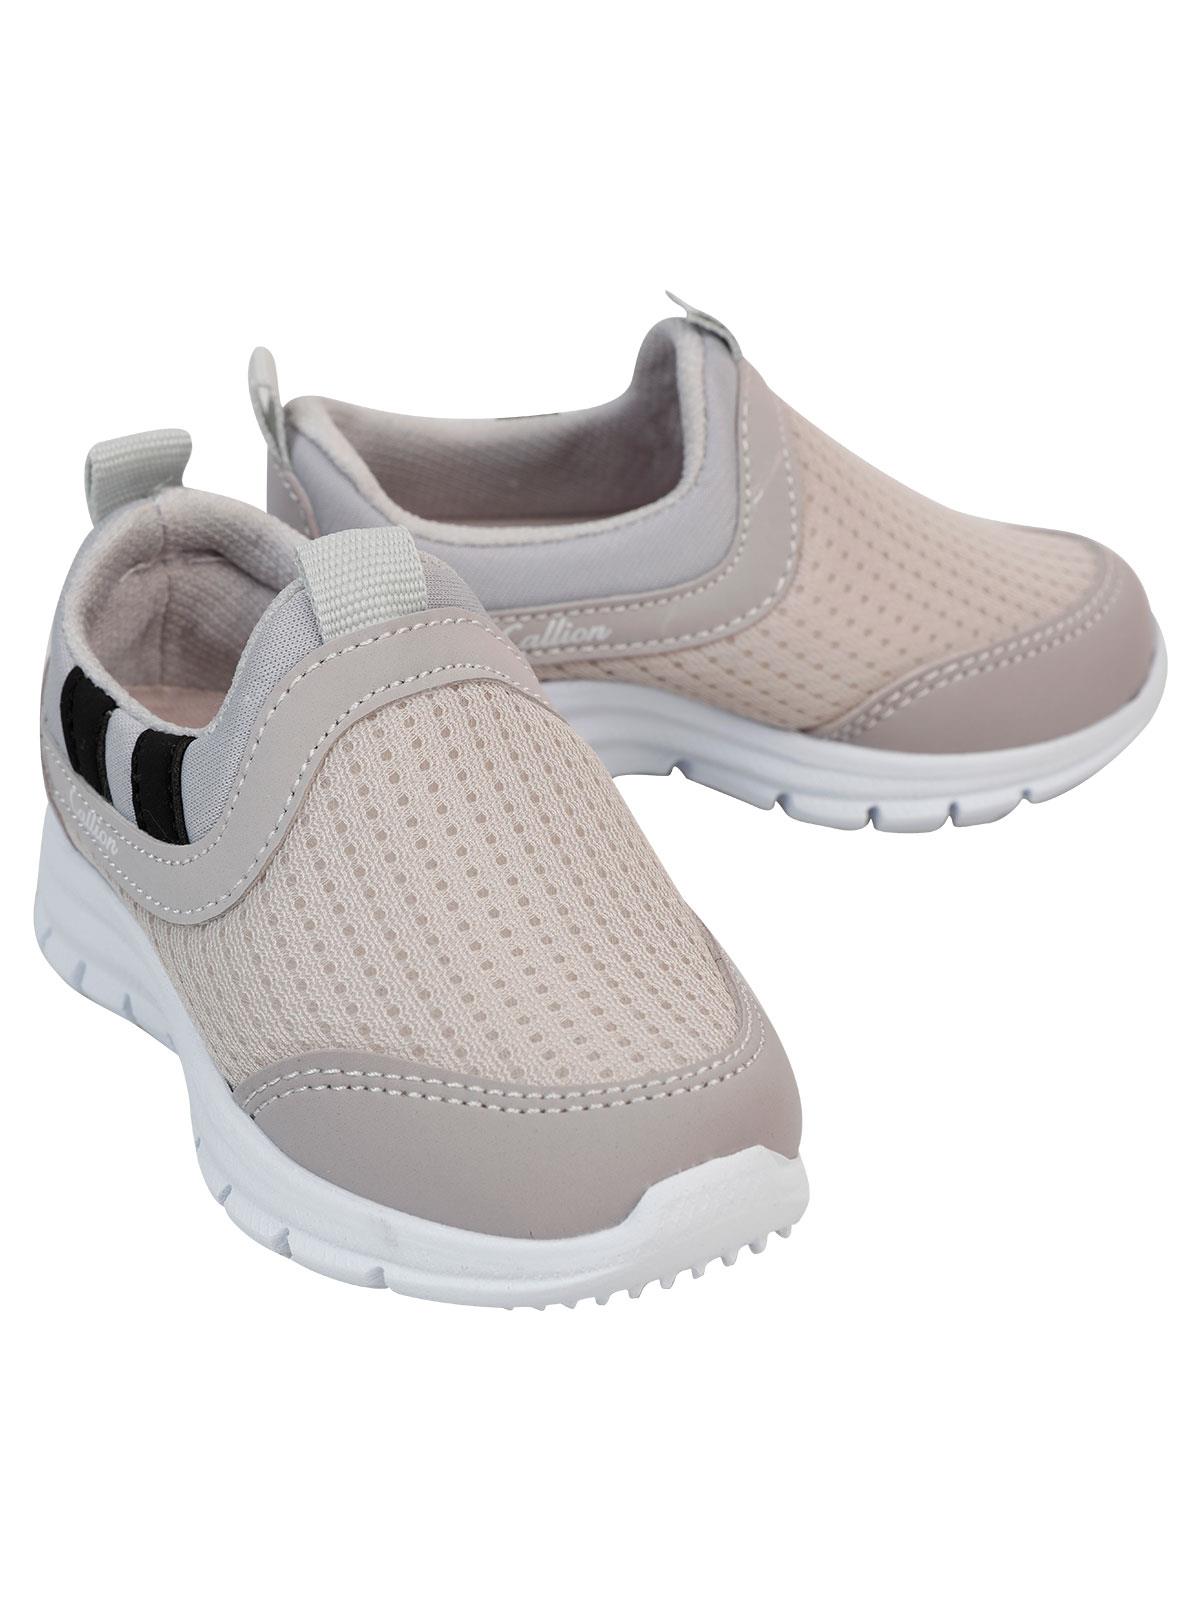 Callion Boys Sneakers حذاء للأطفال - PalDozer